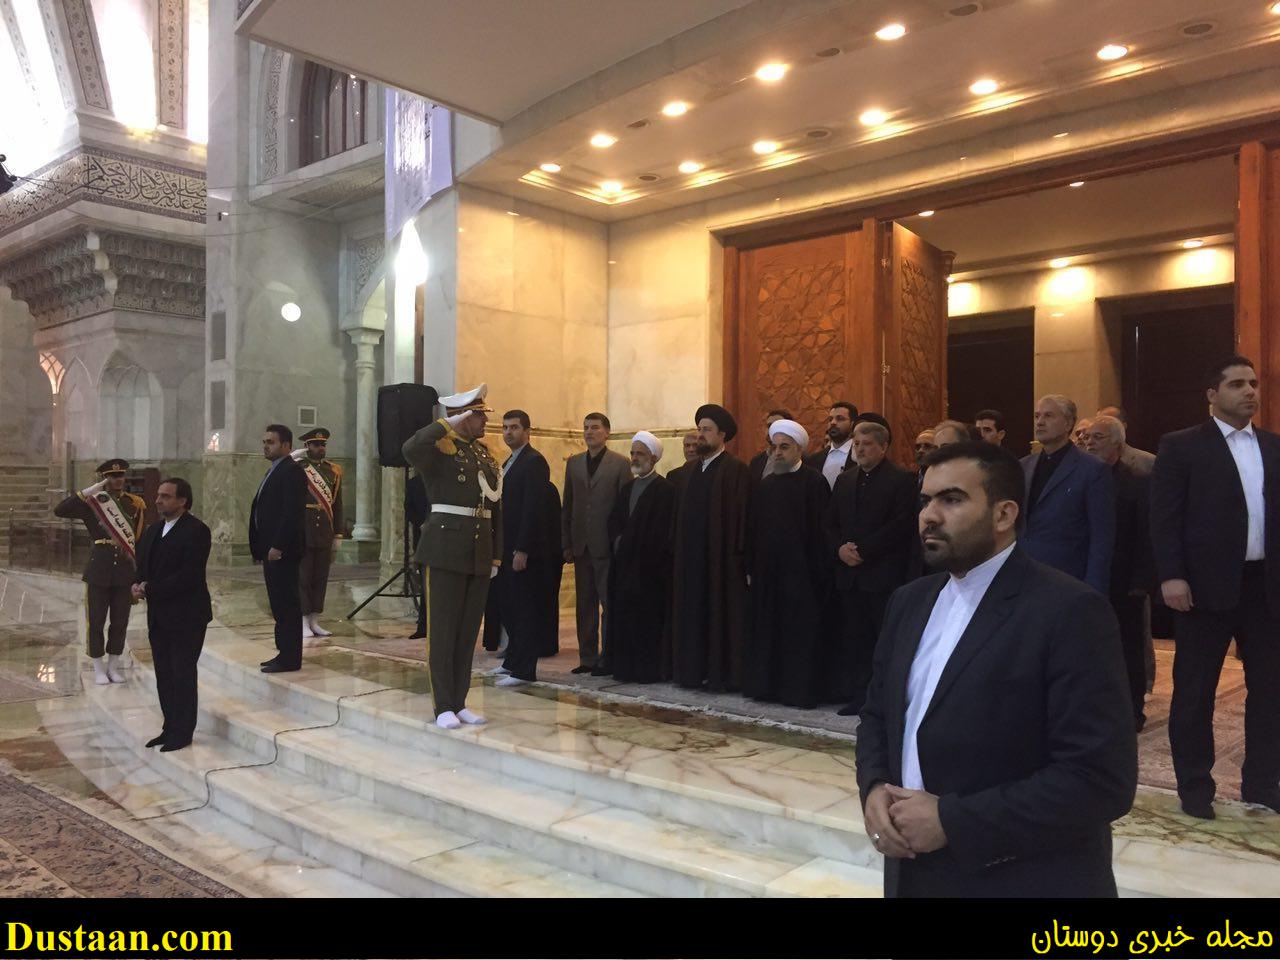 www.dustaan.com-تصاویر: استقبال سیدحسن خمینی از حسن روحانی در حرم امام (ره)